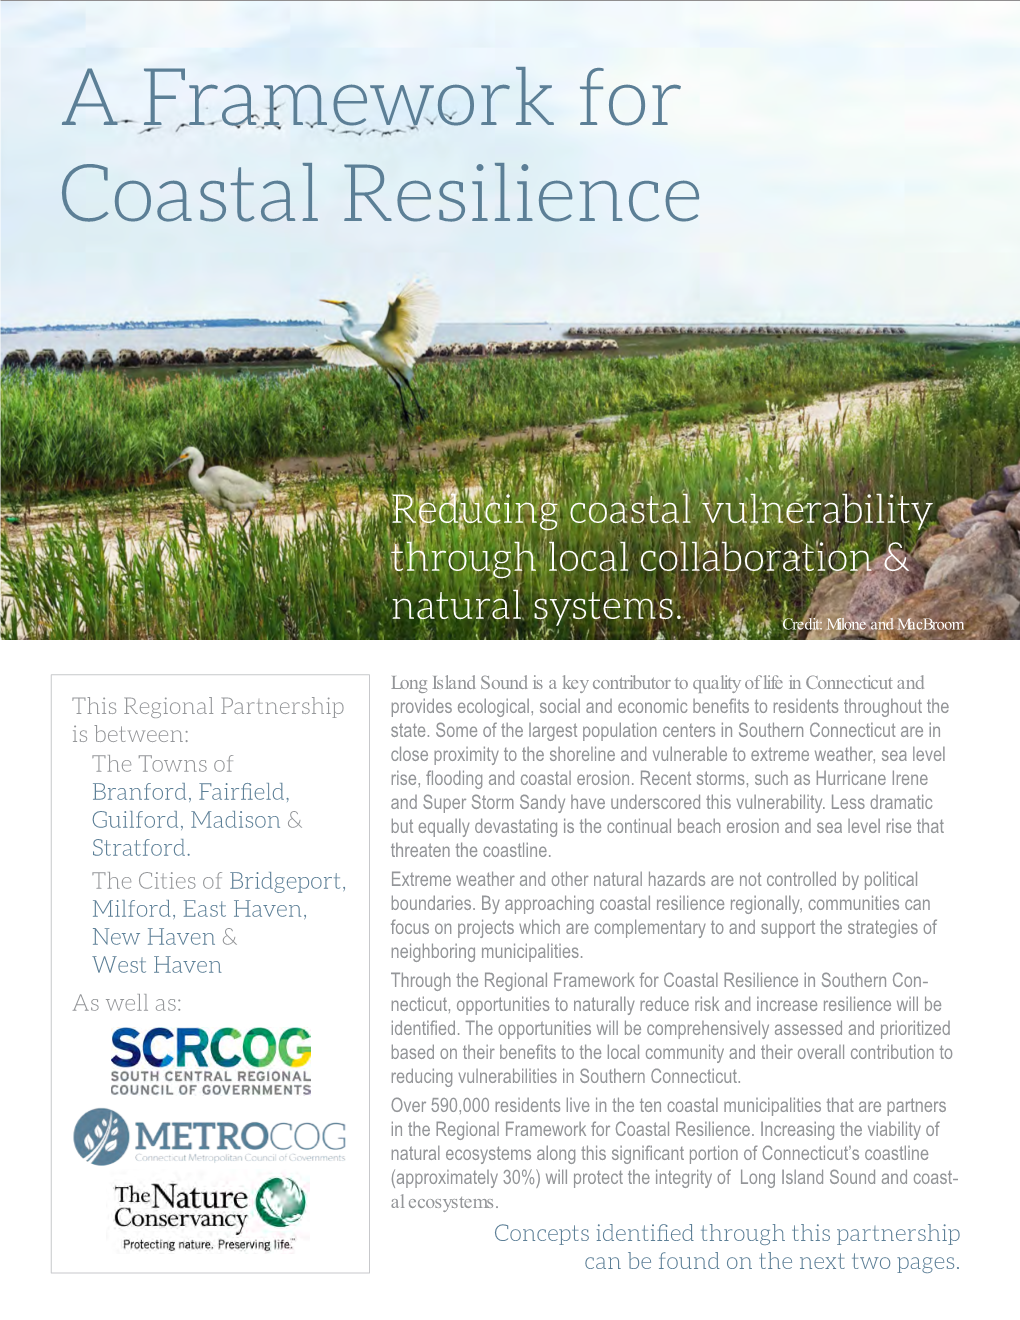 A Framework for Coastal Resilience